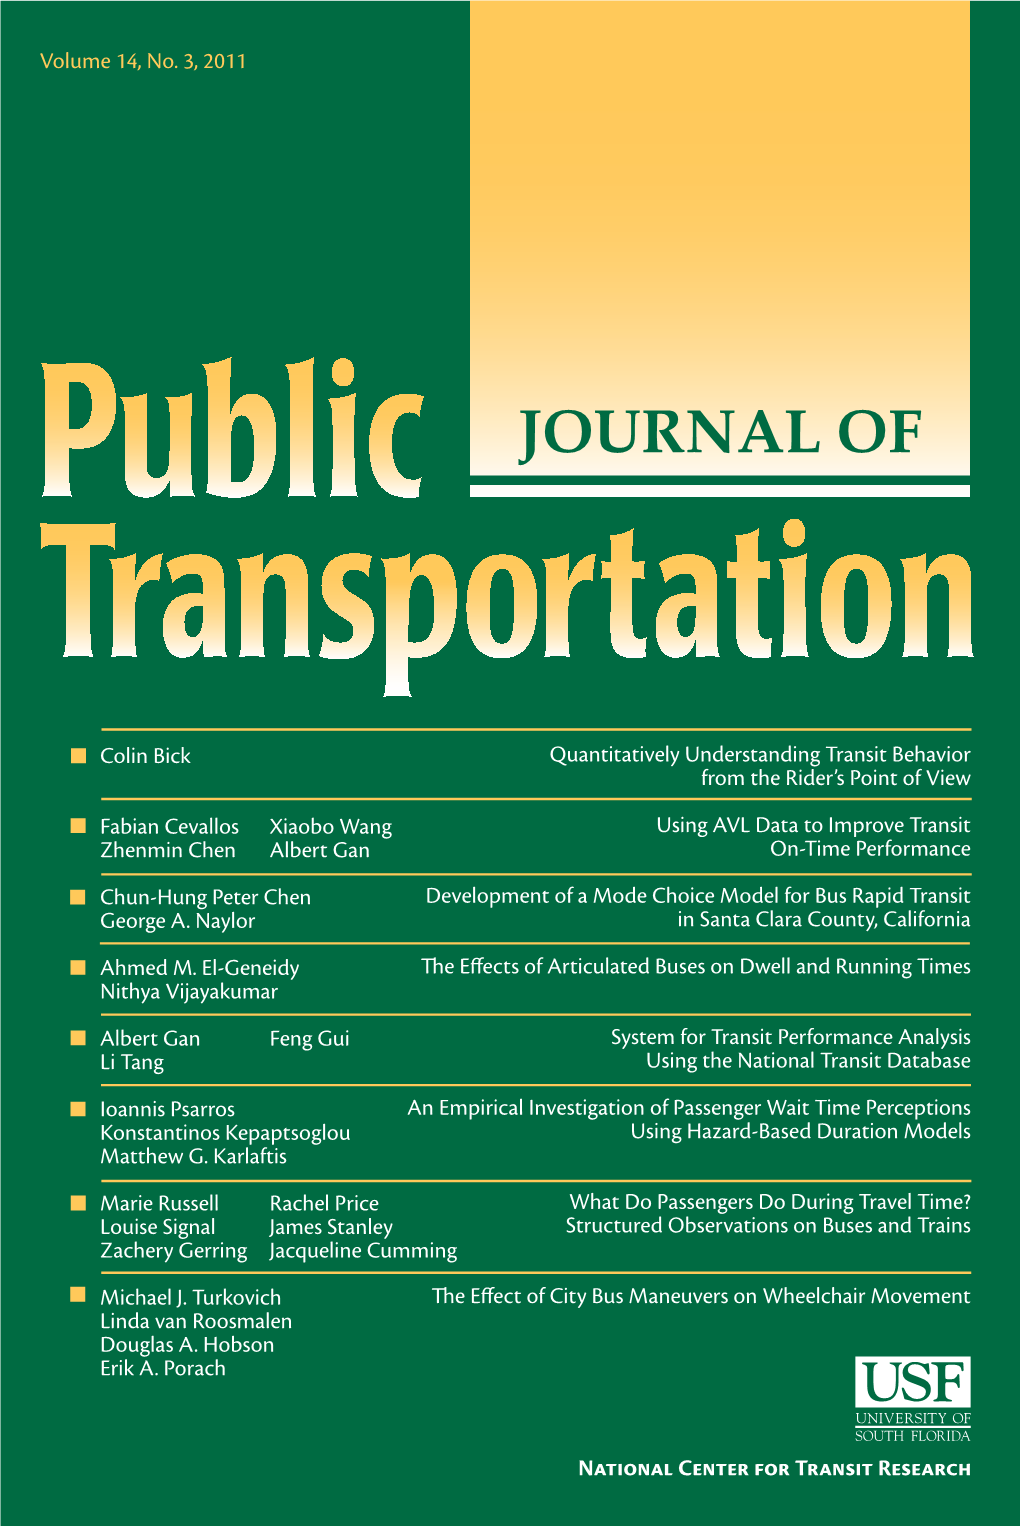 The Journal of Public Transportation